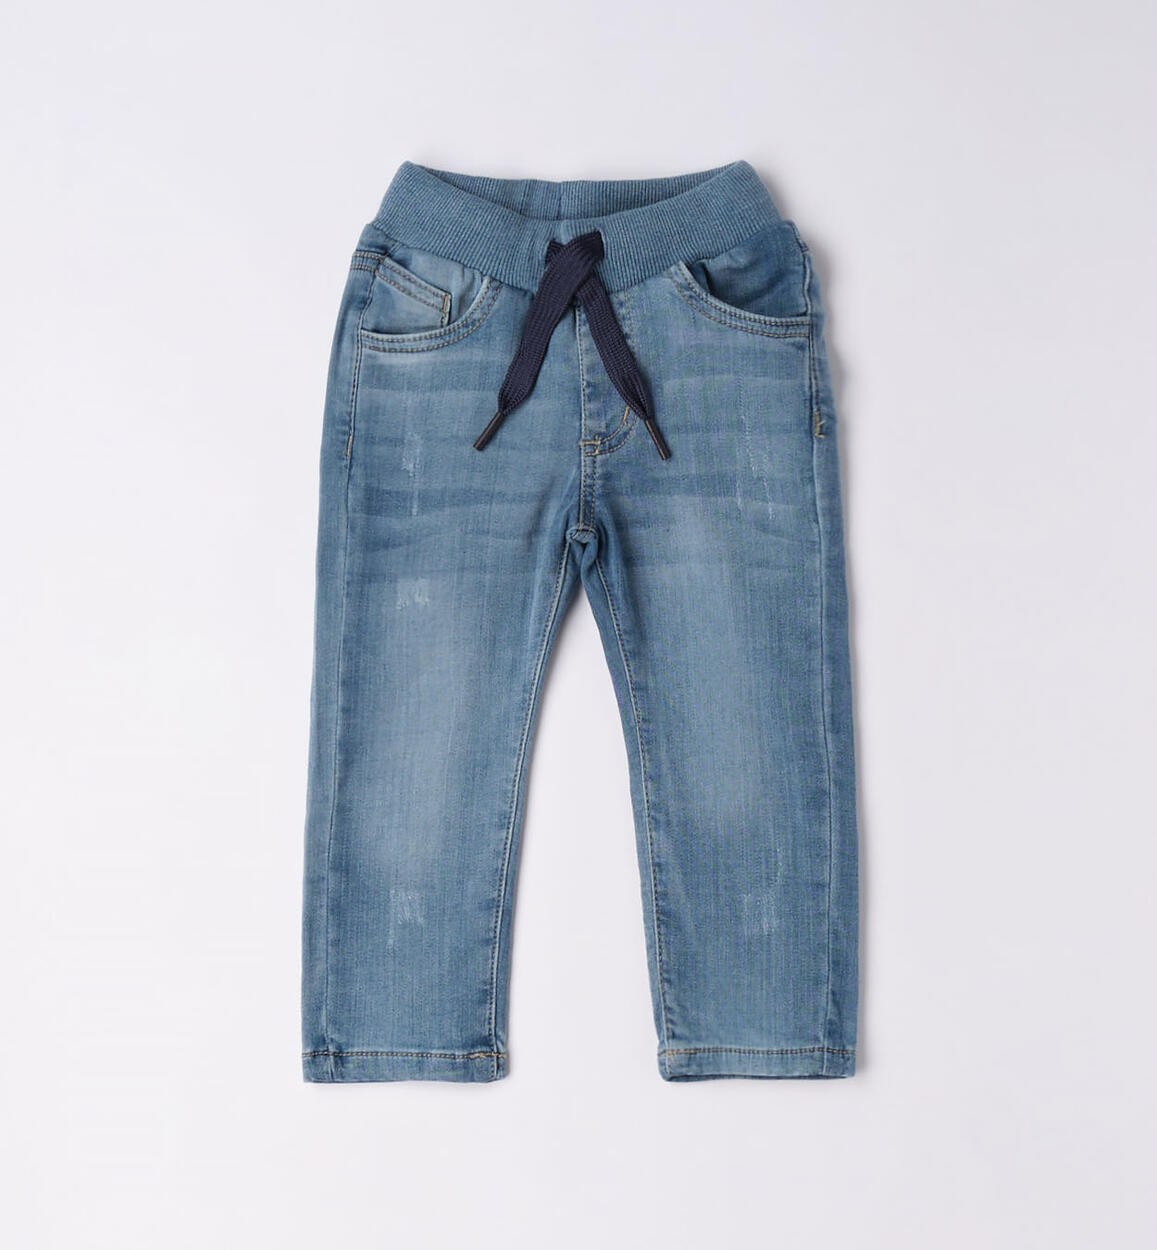 Pantalone jeans bambino BLU Sarabanda